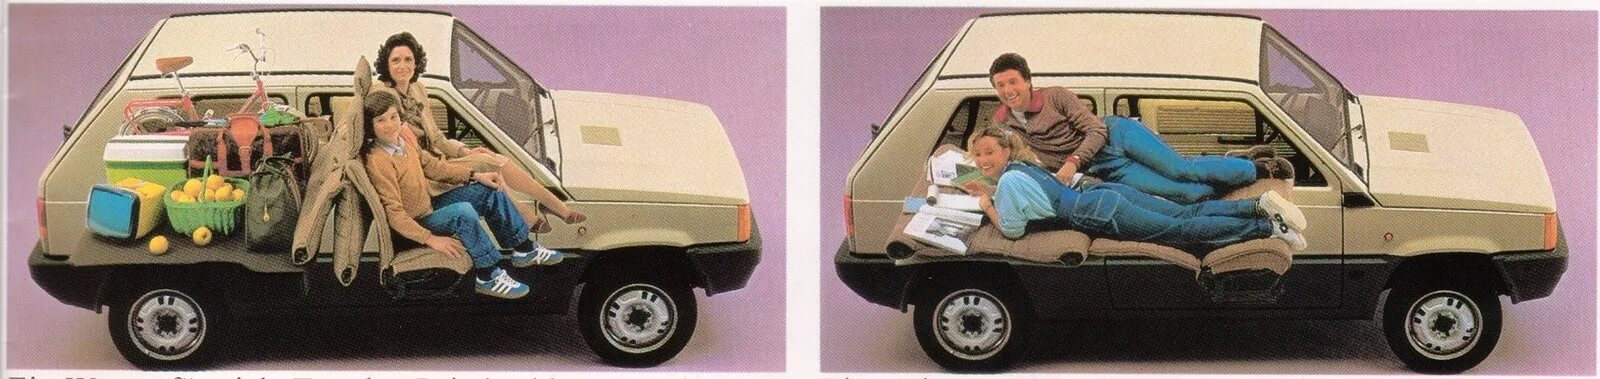 Get off the car. Fiat Panda 4x4 1990. Fiat Panda 1980. Fiat Panda 4*4 1990. Fiat Panda 4x4 1983 twinsss.